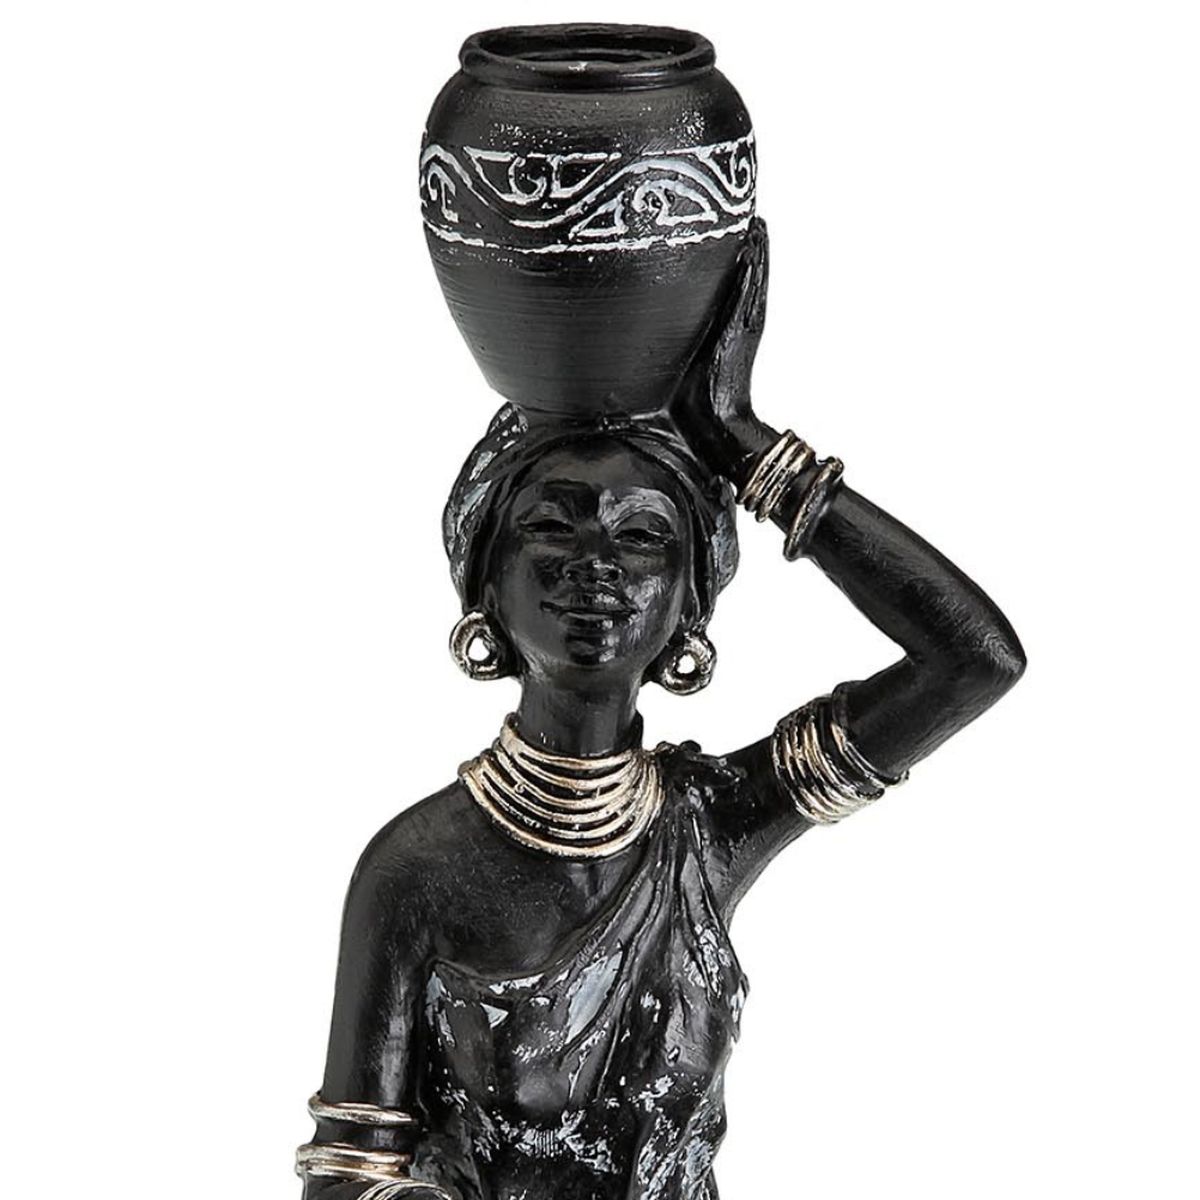 Dcoration femme africaine porteuse d'eau assise